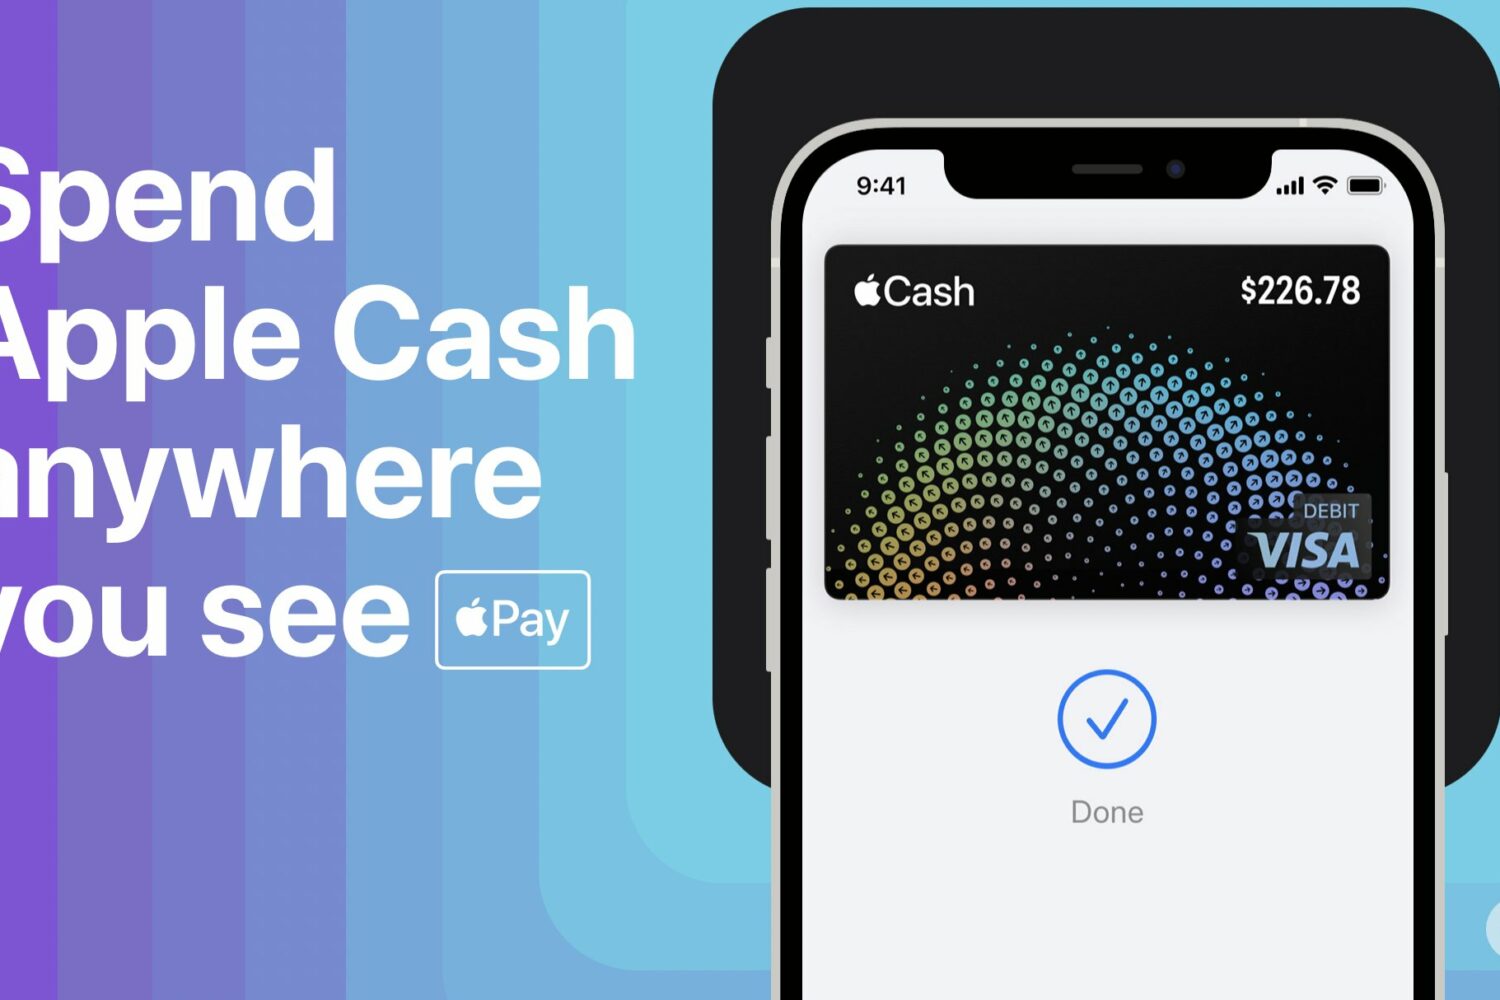 Splash screens showcasing Apple's virtual Apple Pay Cash debit card on the Visa network